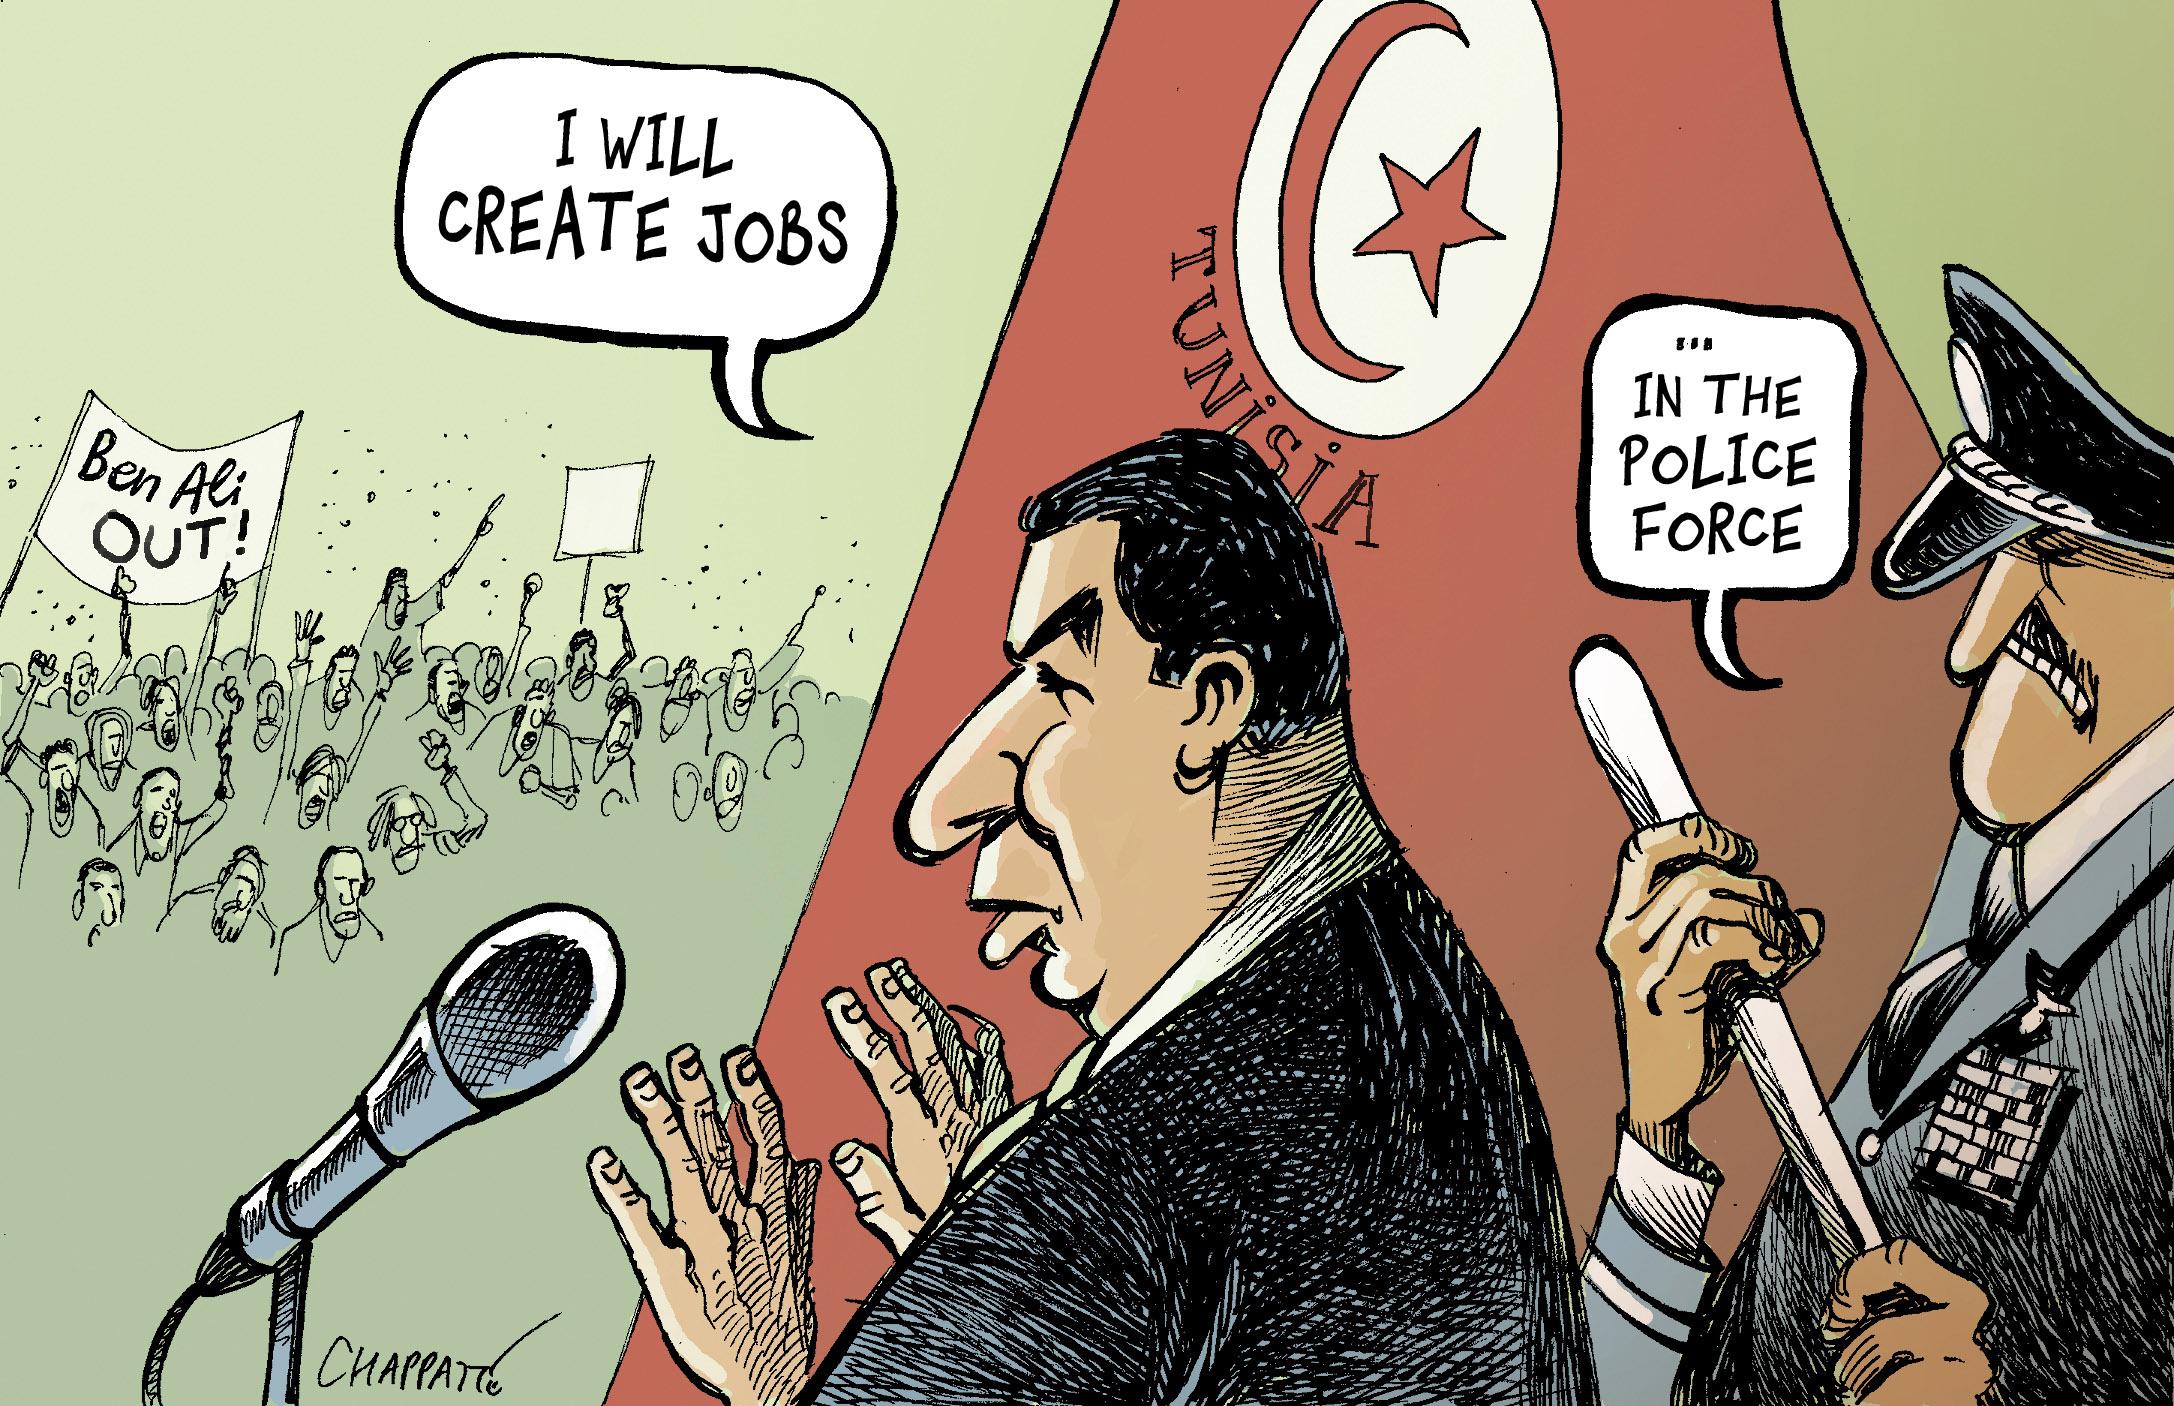 Anger in Tunisia